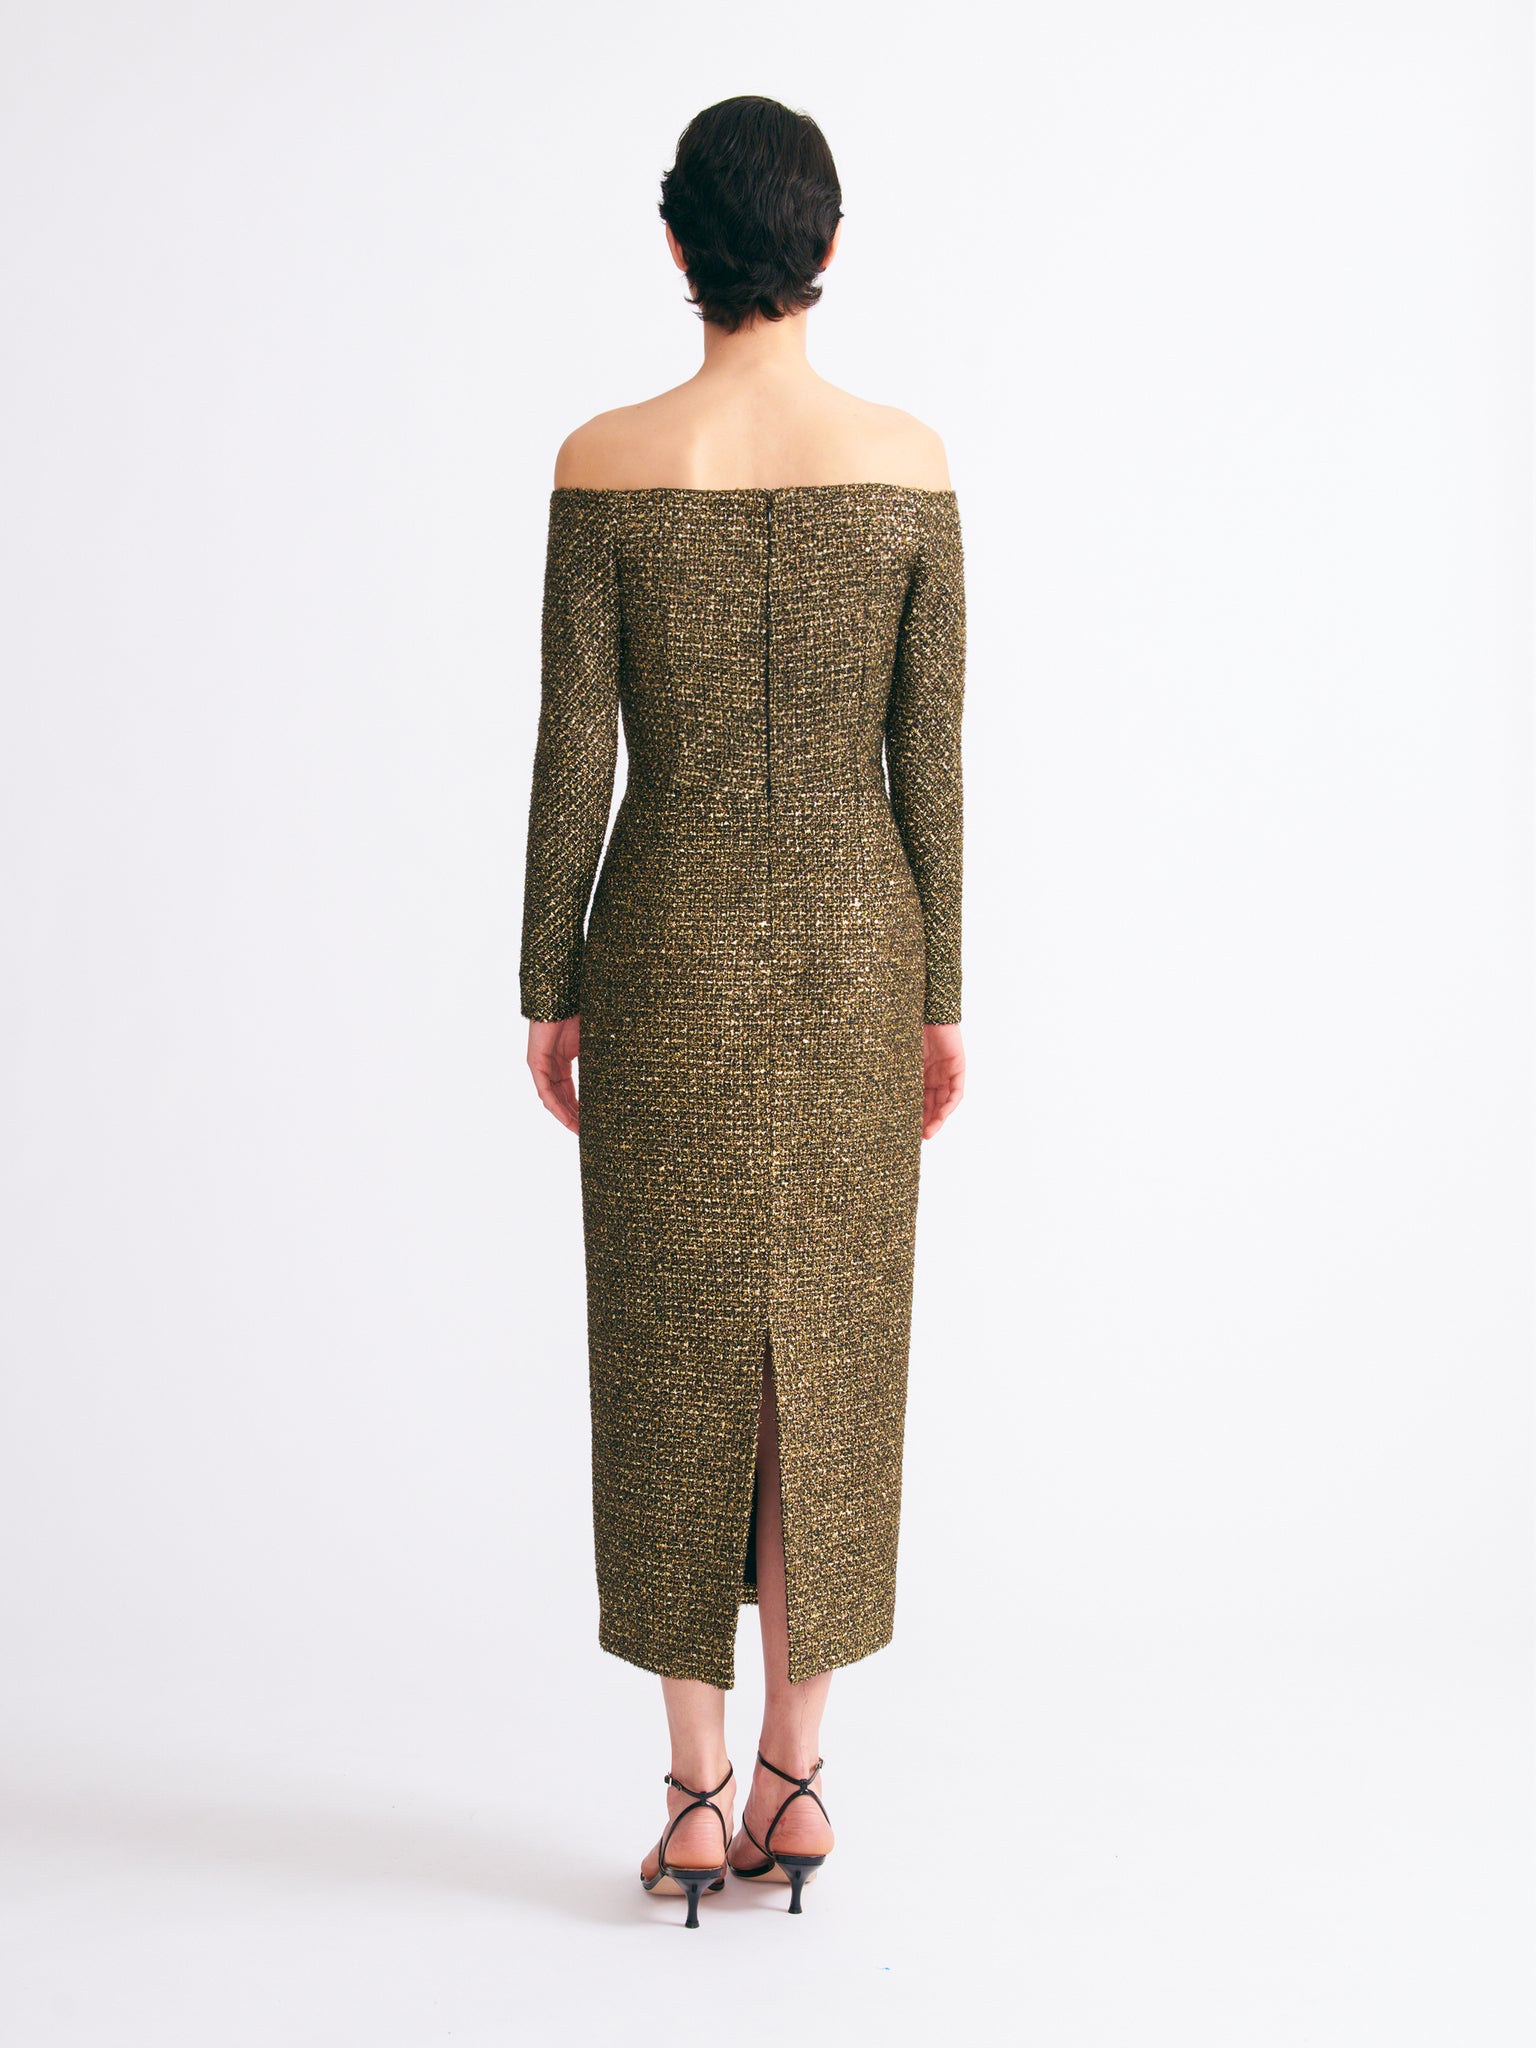 Birch Dress in Gold Disco Tweed | Emilia Wickstead